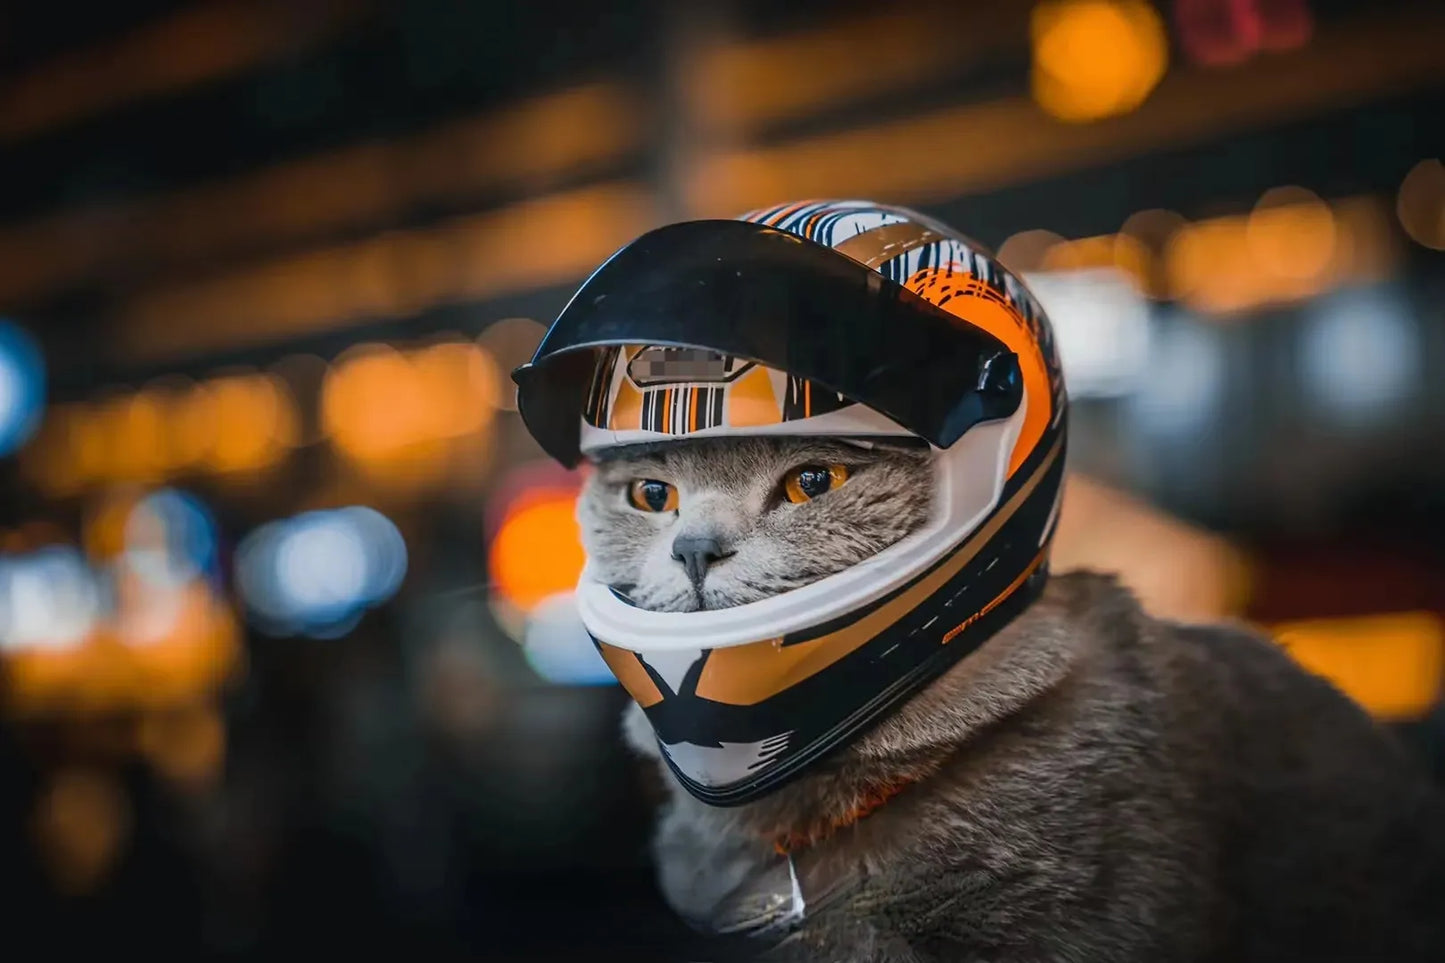 The Cat Motorcycle Helmet